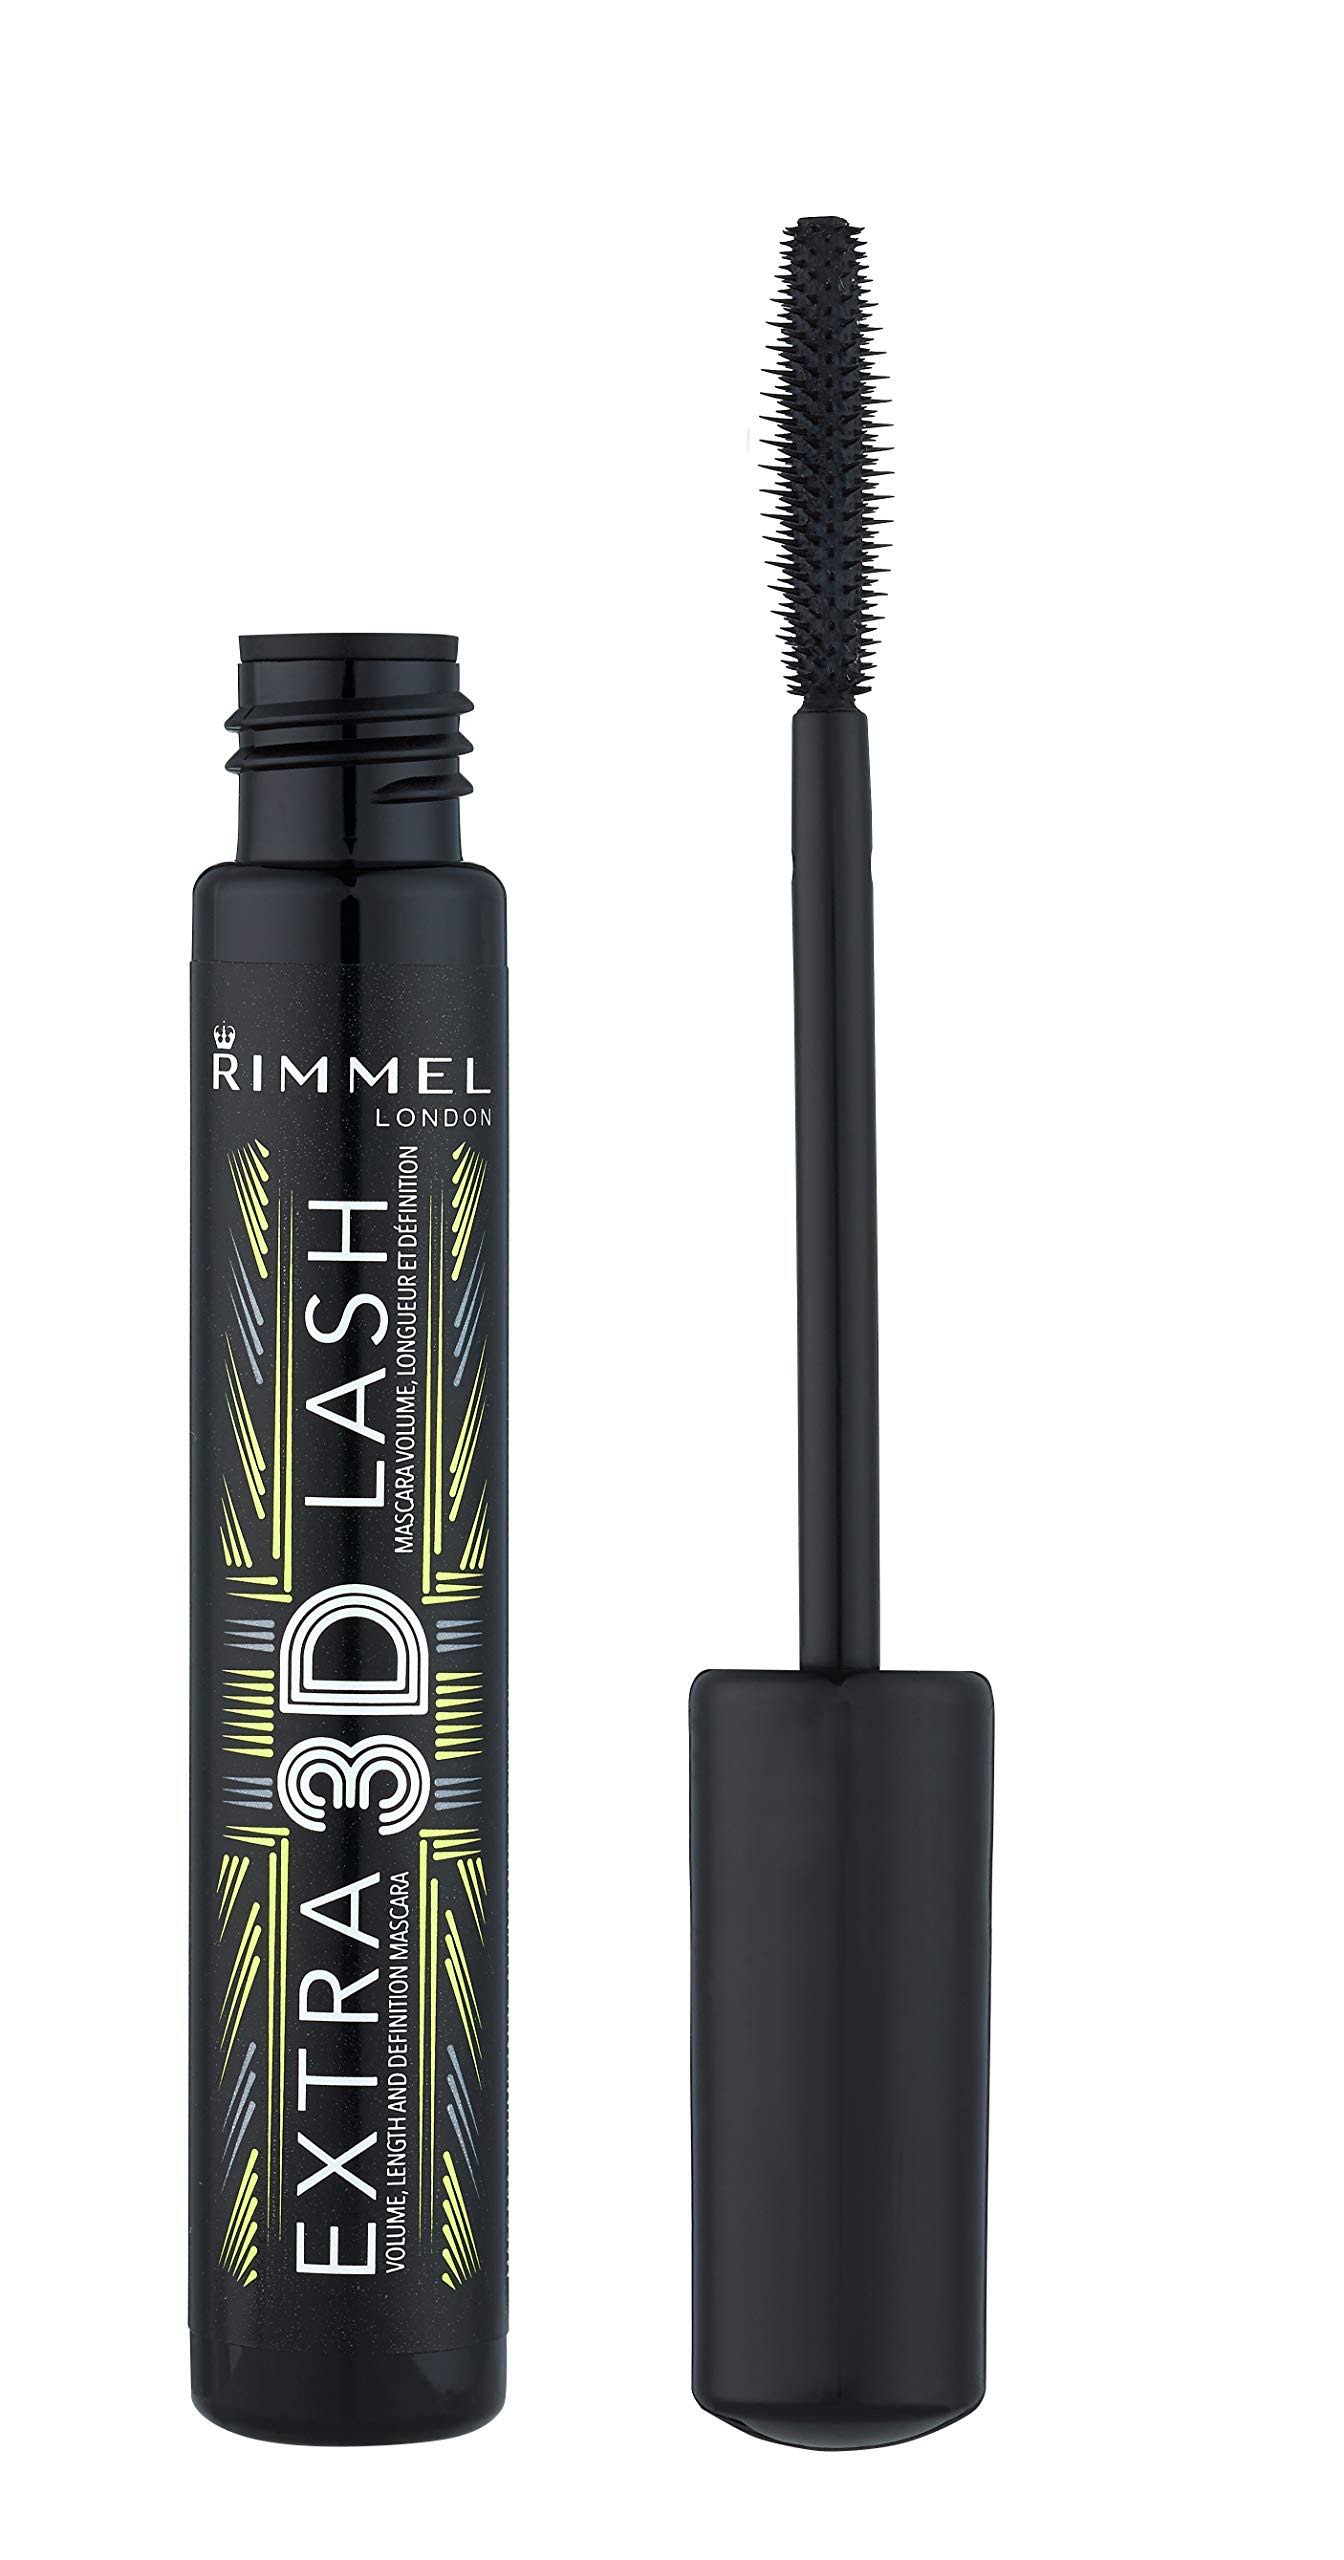 Rimmel London Extra 3D Lash Mascara - 003 Extreme Black, 8ml